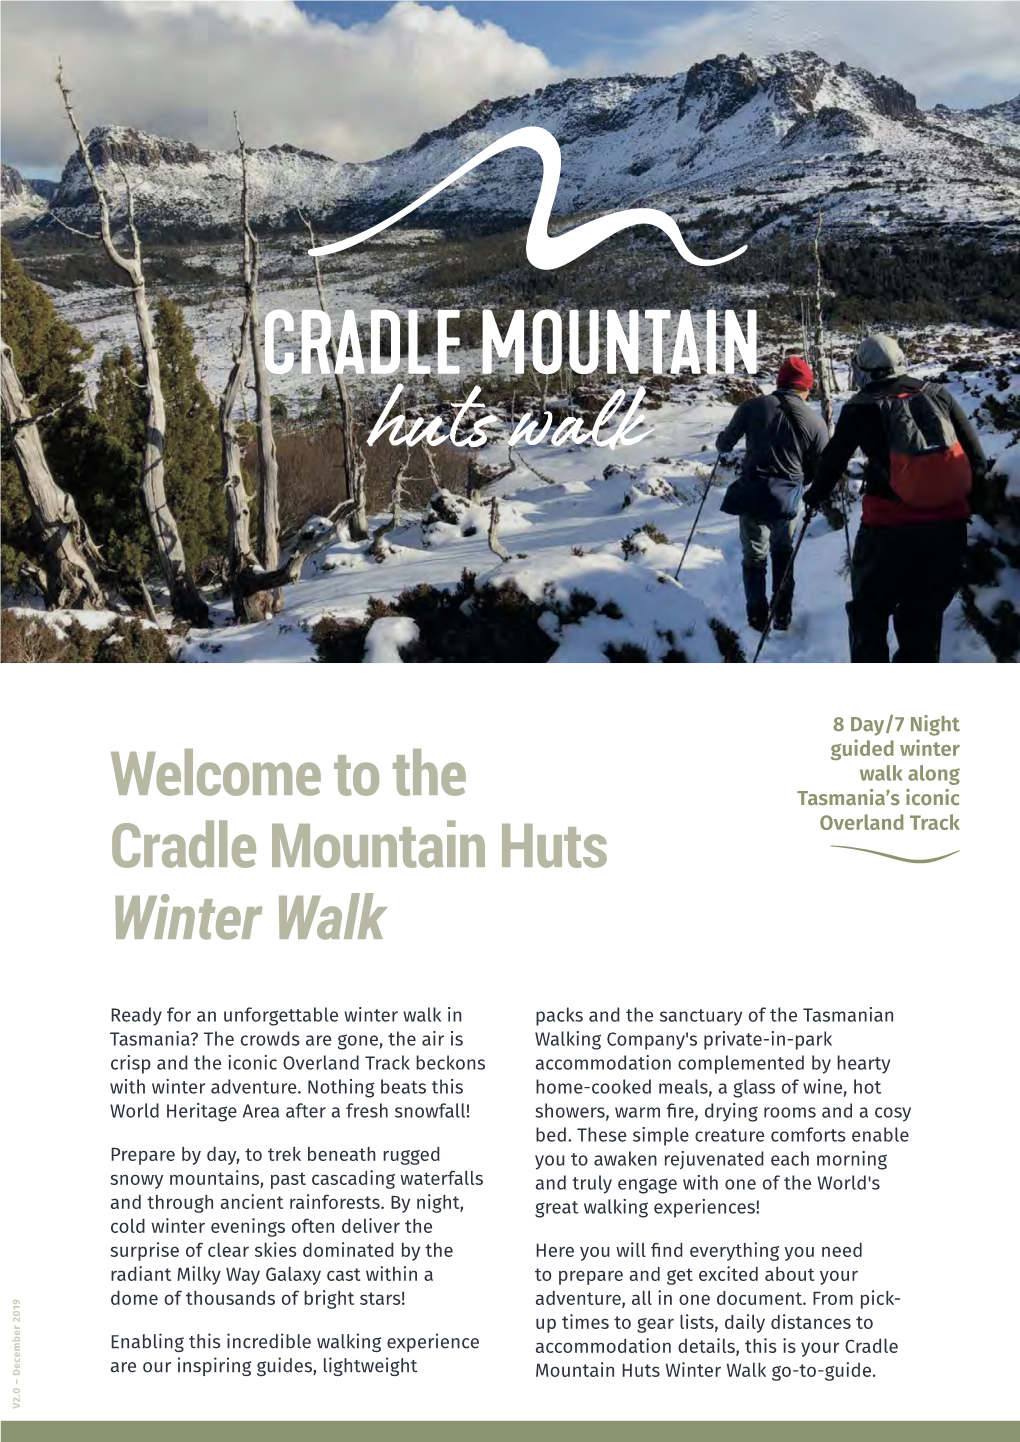 The Cradle Mountain Huts Winter Walk